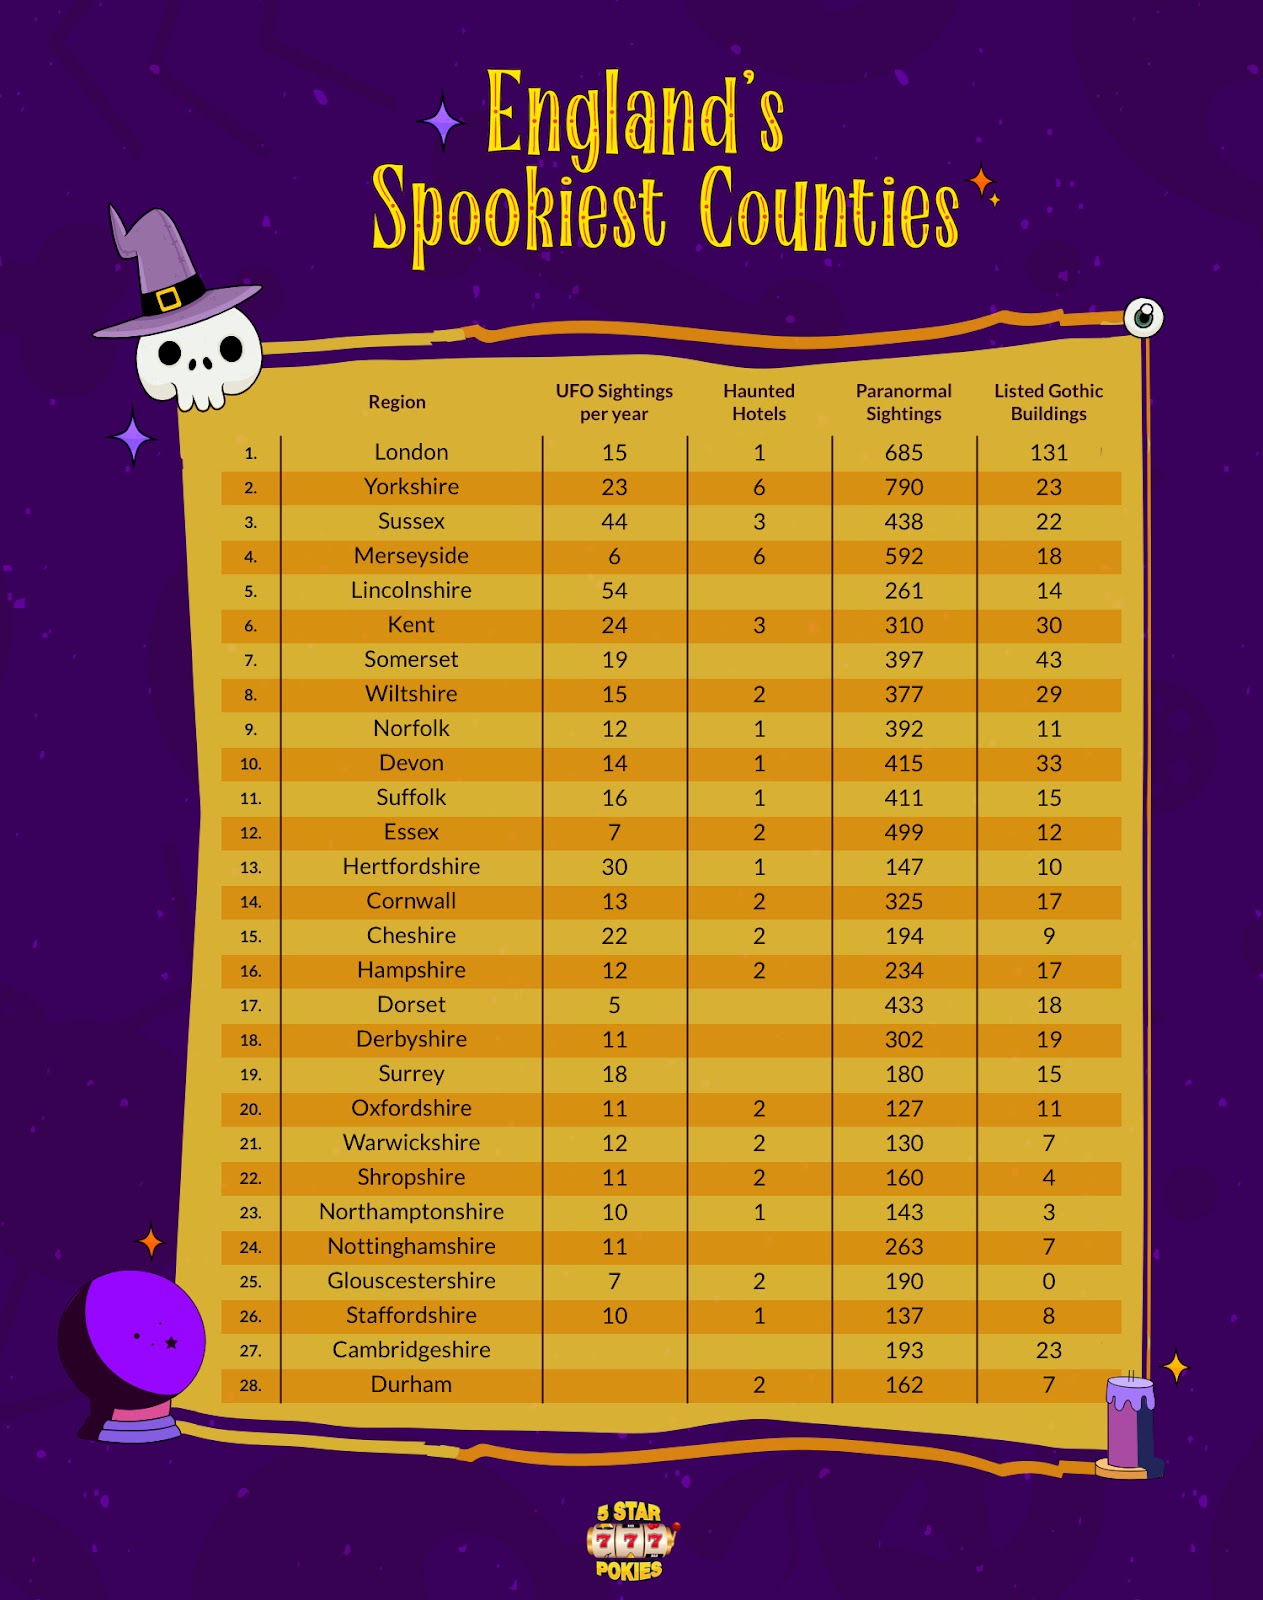 Spooky Counties list